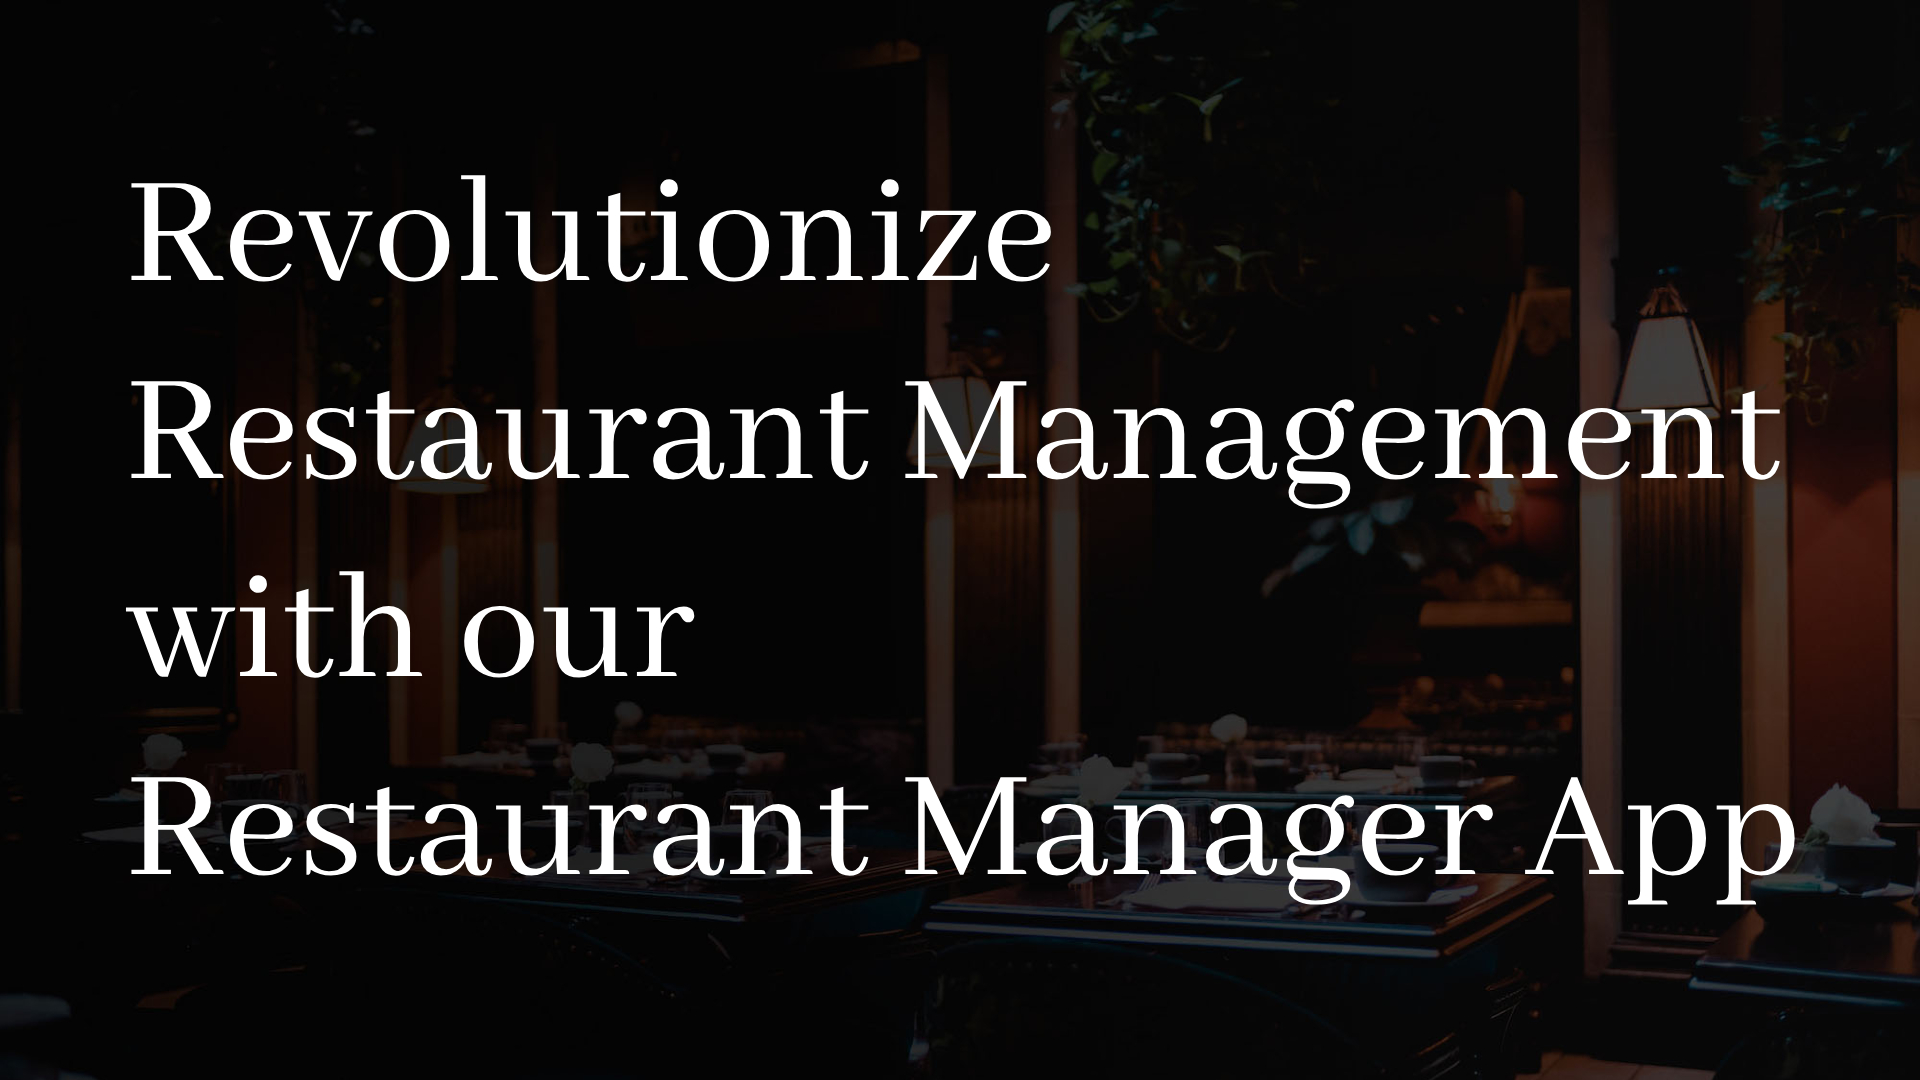 Revolutionize Restaurant Management with our Restaurant Manager App